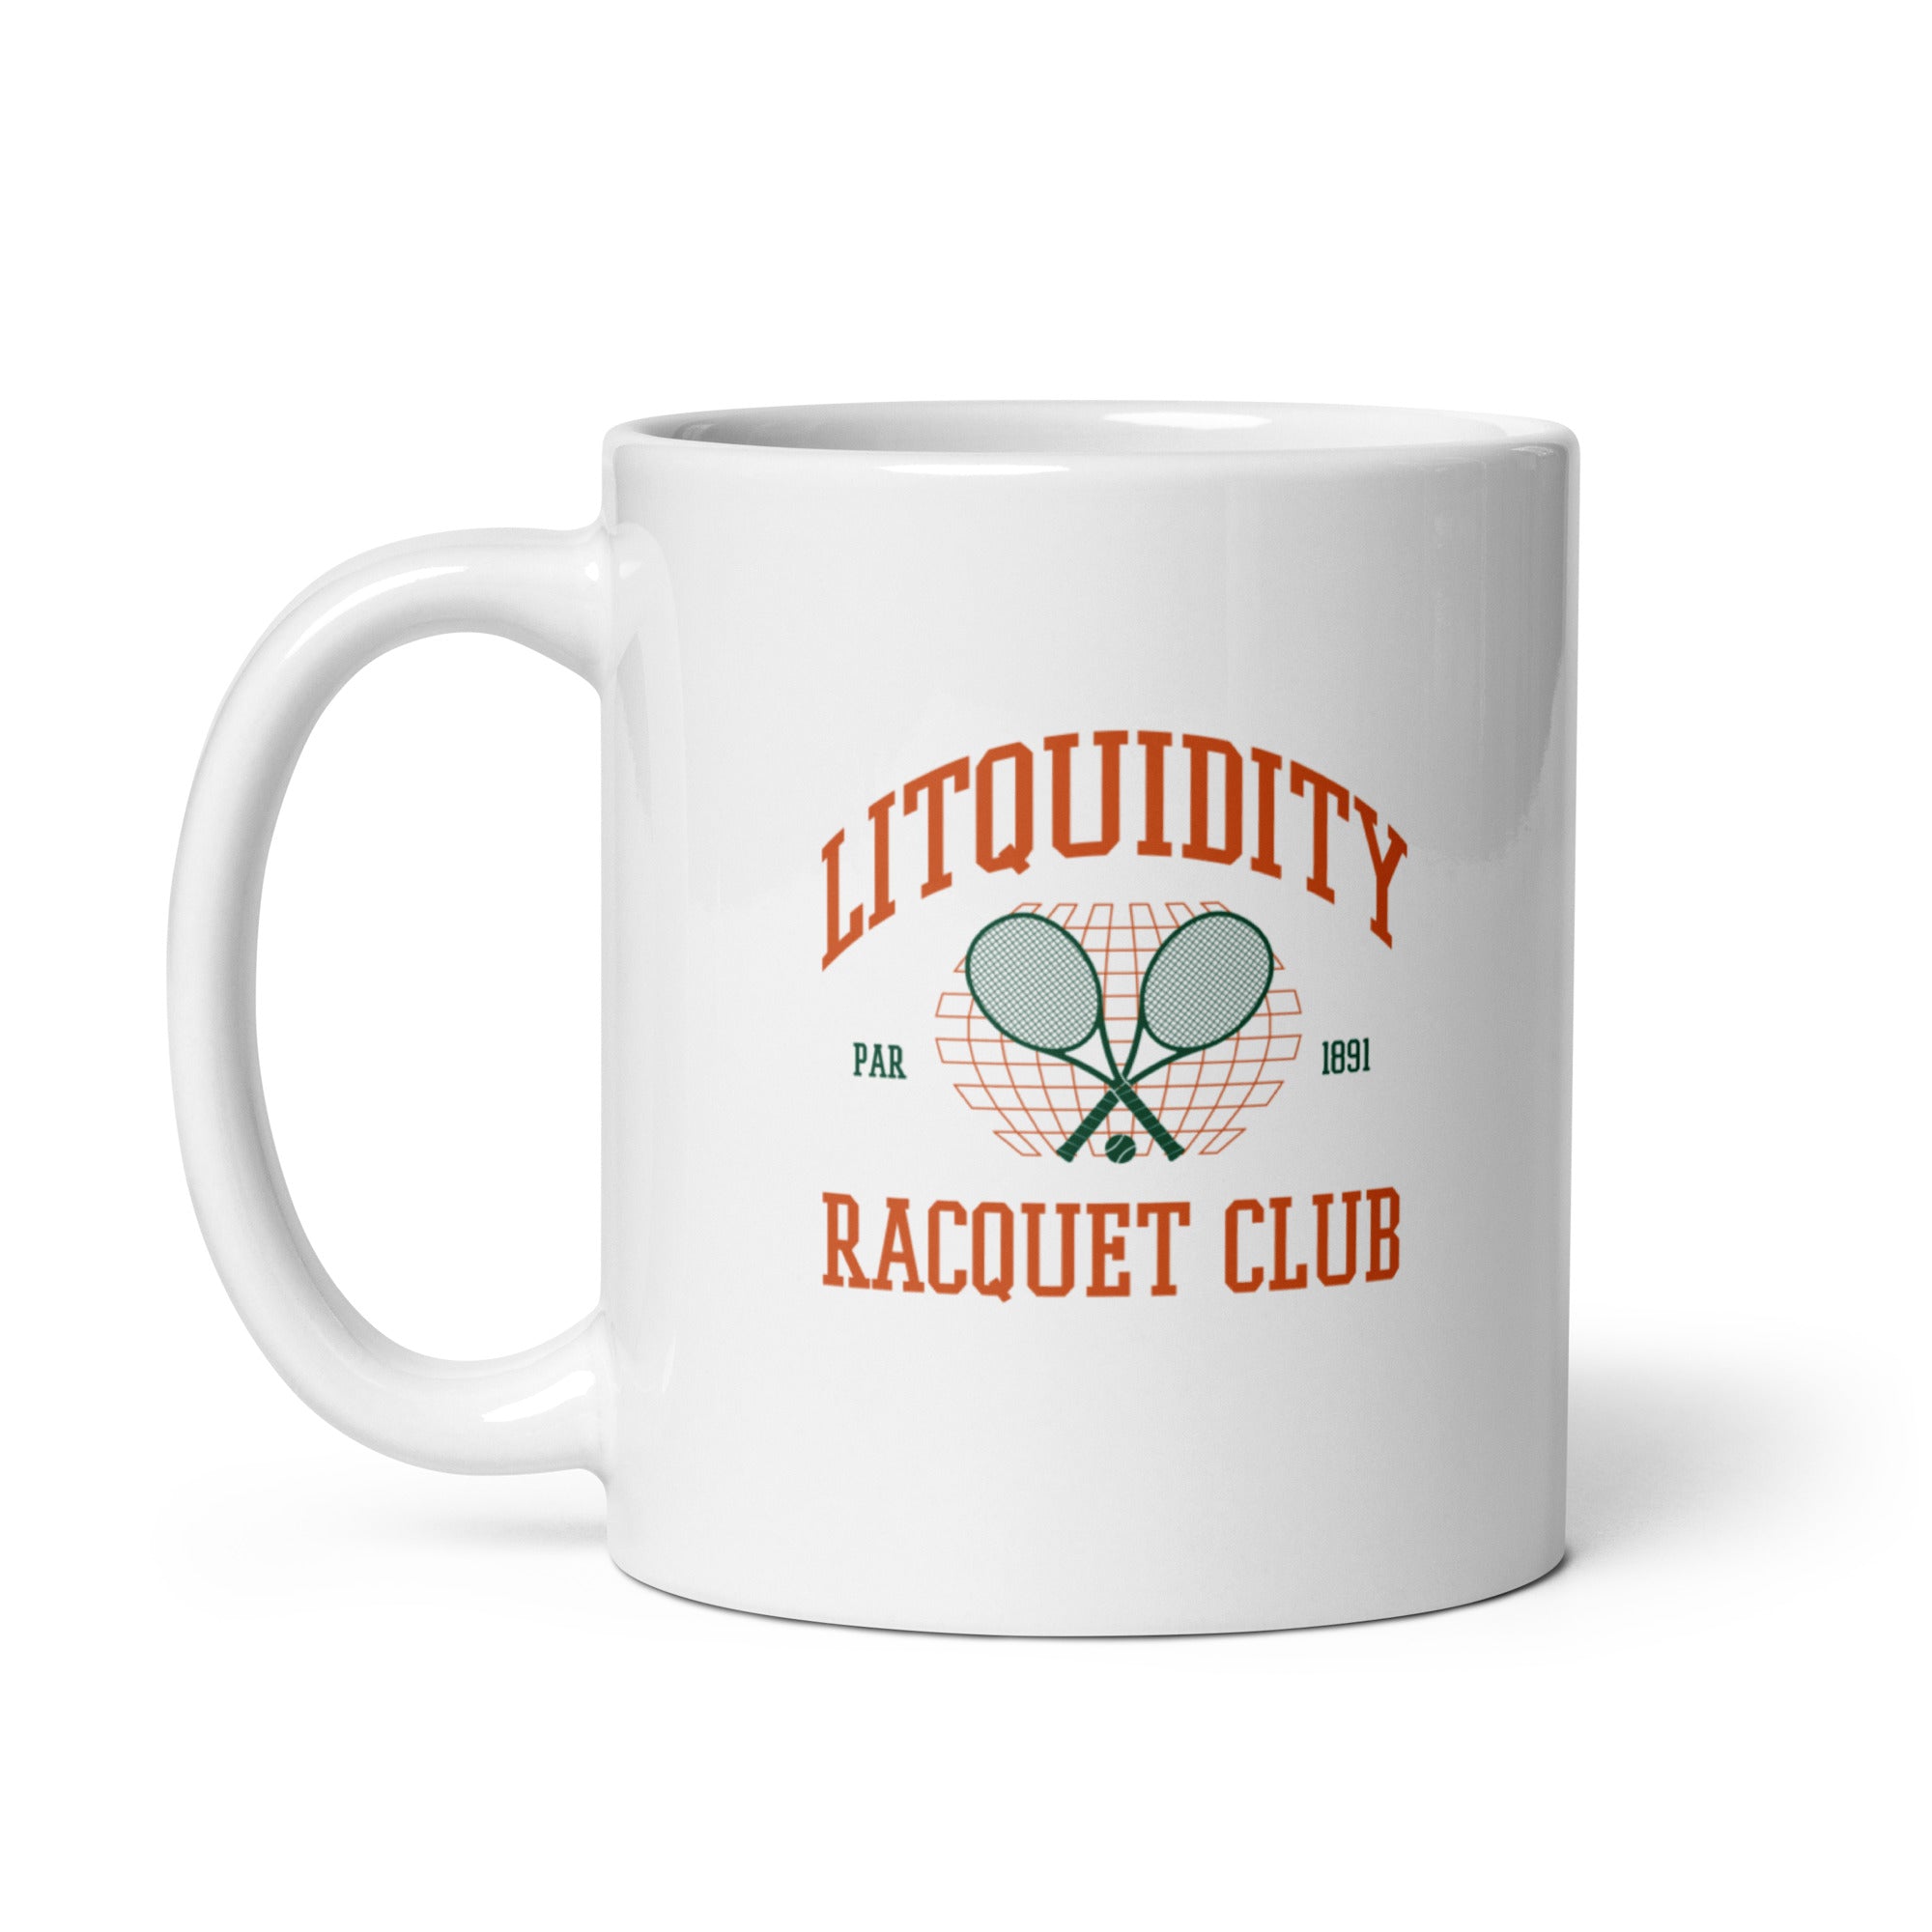 Litquidity Racquet Club - RG Mug